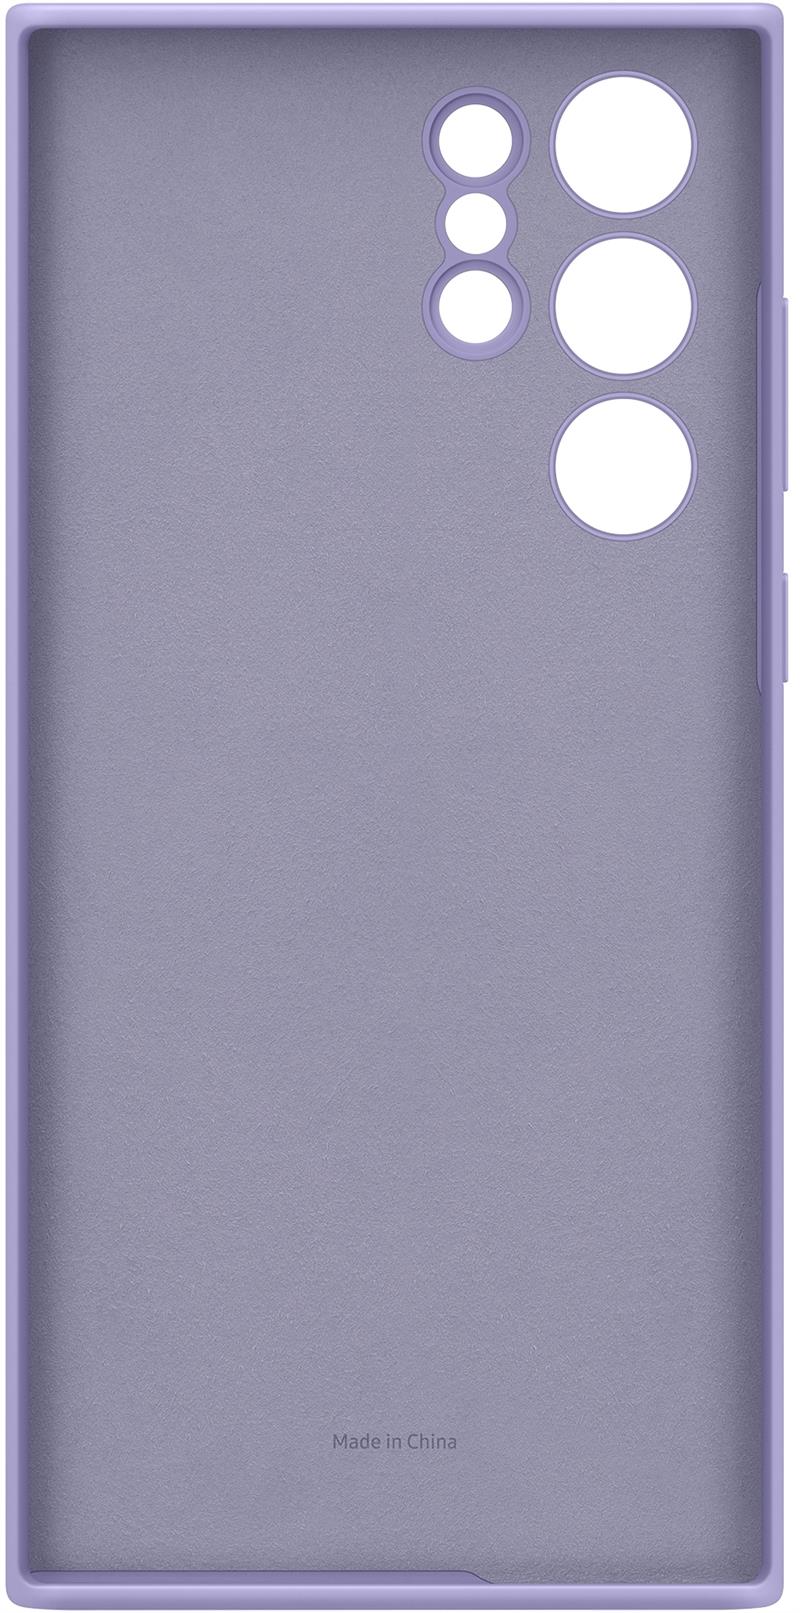  Samsung Silicone Cover Galaxy S22 Ultra 5G Lavender